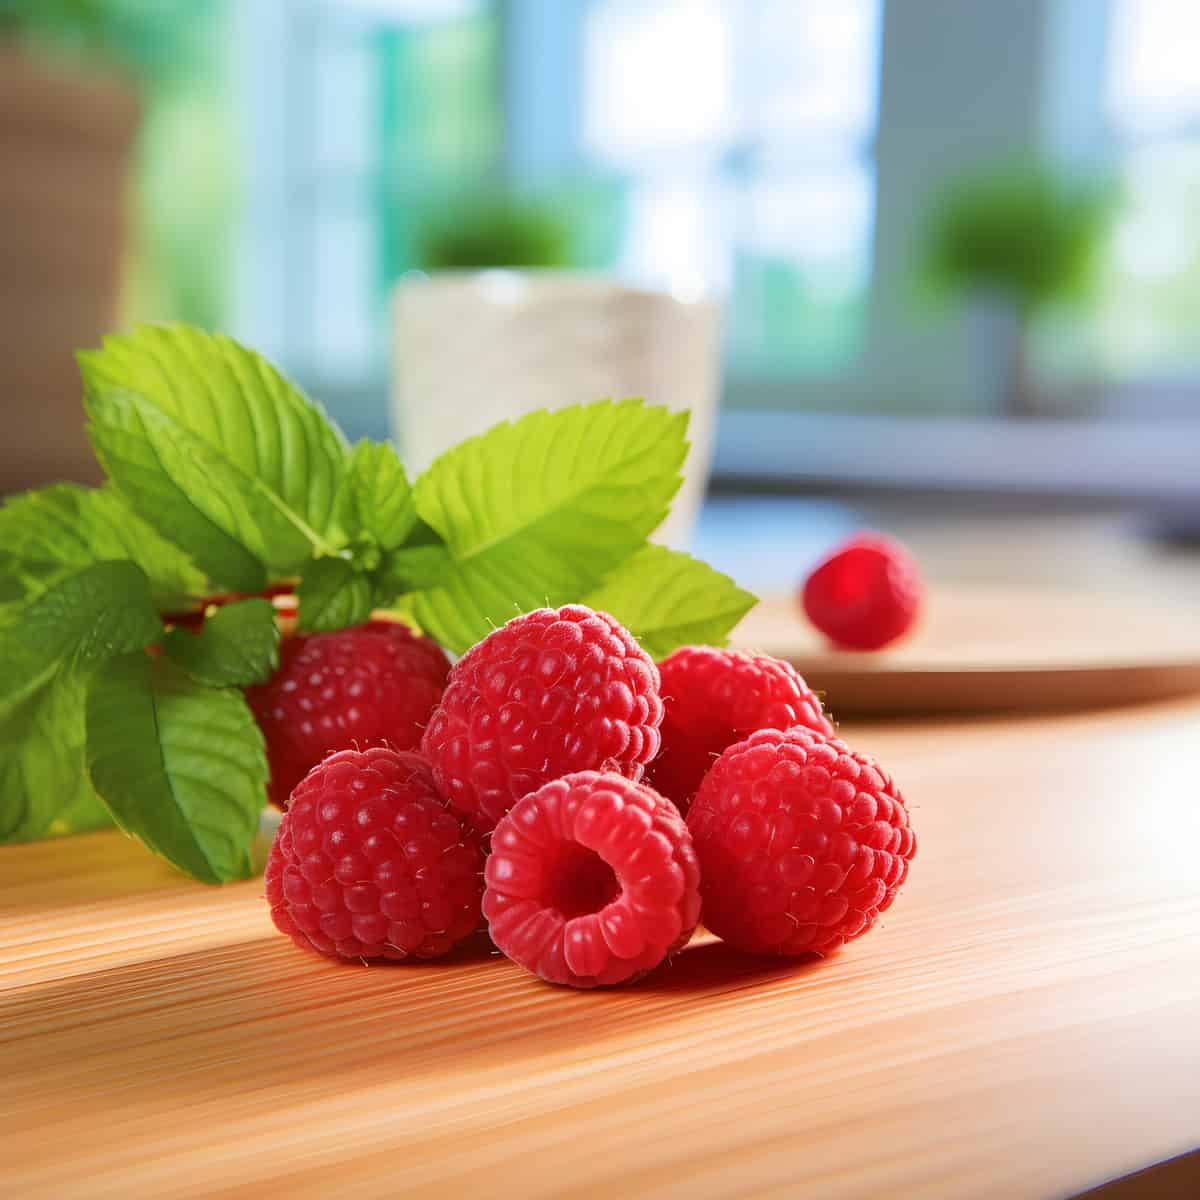 European Red Raspberries on a kitchen counter